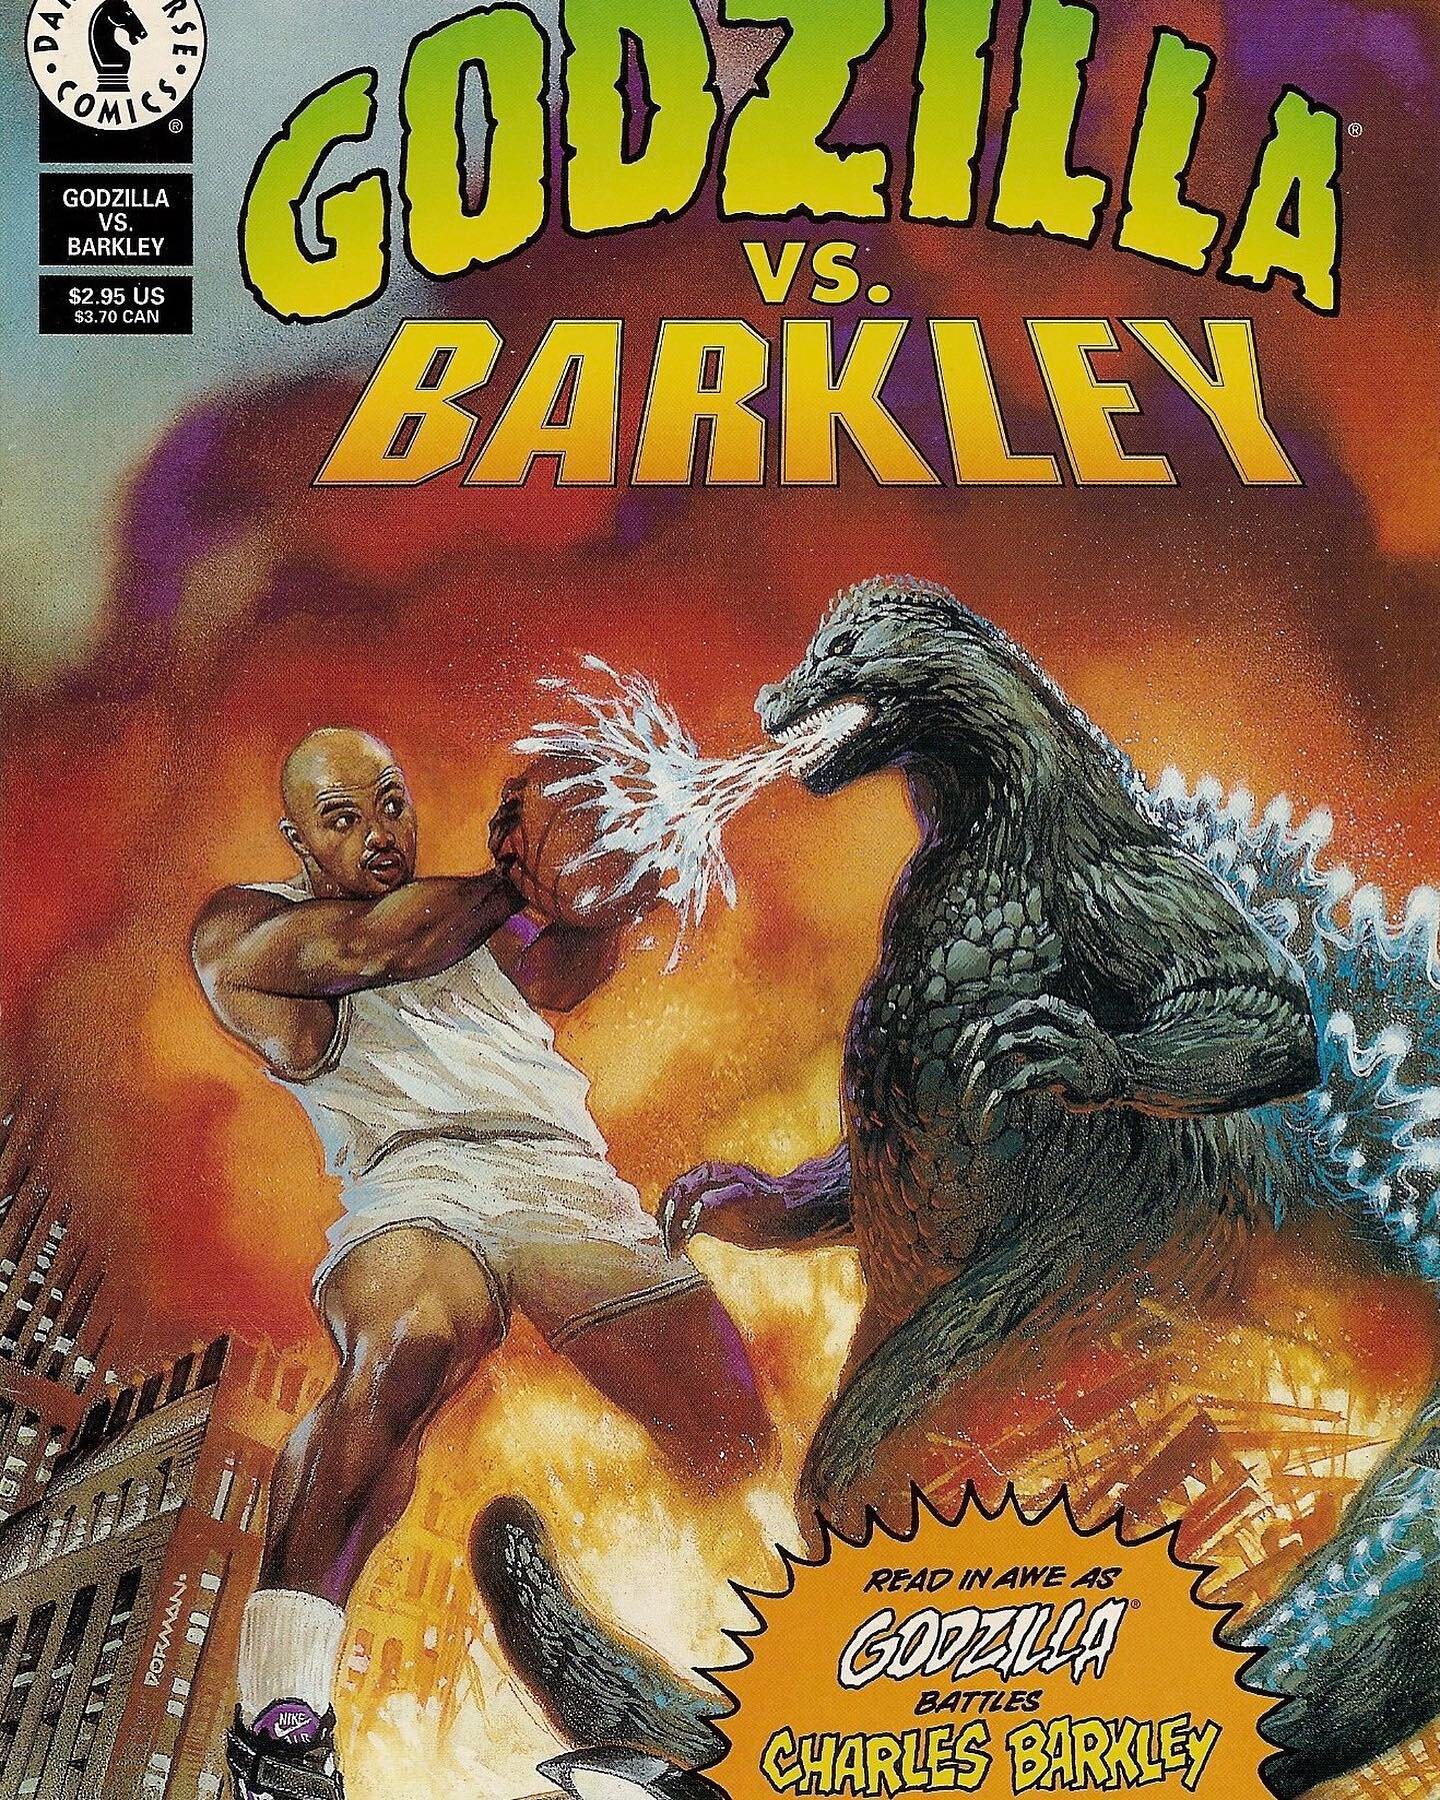 Godzilla vs Barkley 

Publication Date:
December 01, 1993

Writer: Mike Baron &amp; Alan Smithee
Penciller: Jeff Butler
Cover: Dave Dorman

#comicbook #comicbookart #comicbooks #comicbookartist #posterdesign #poster #posterart #posters #darkhorsecomi